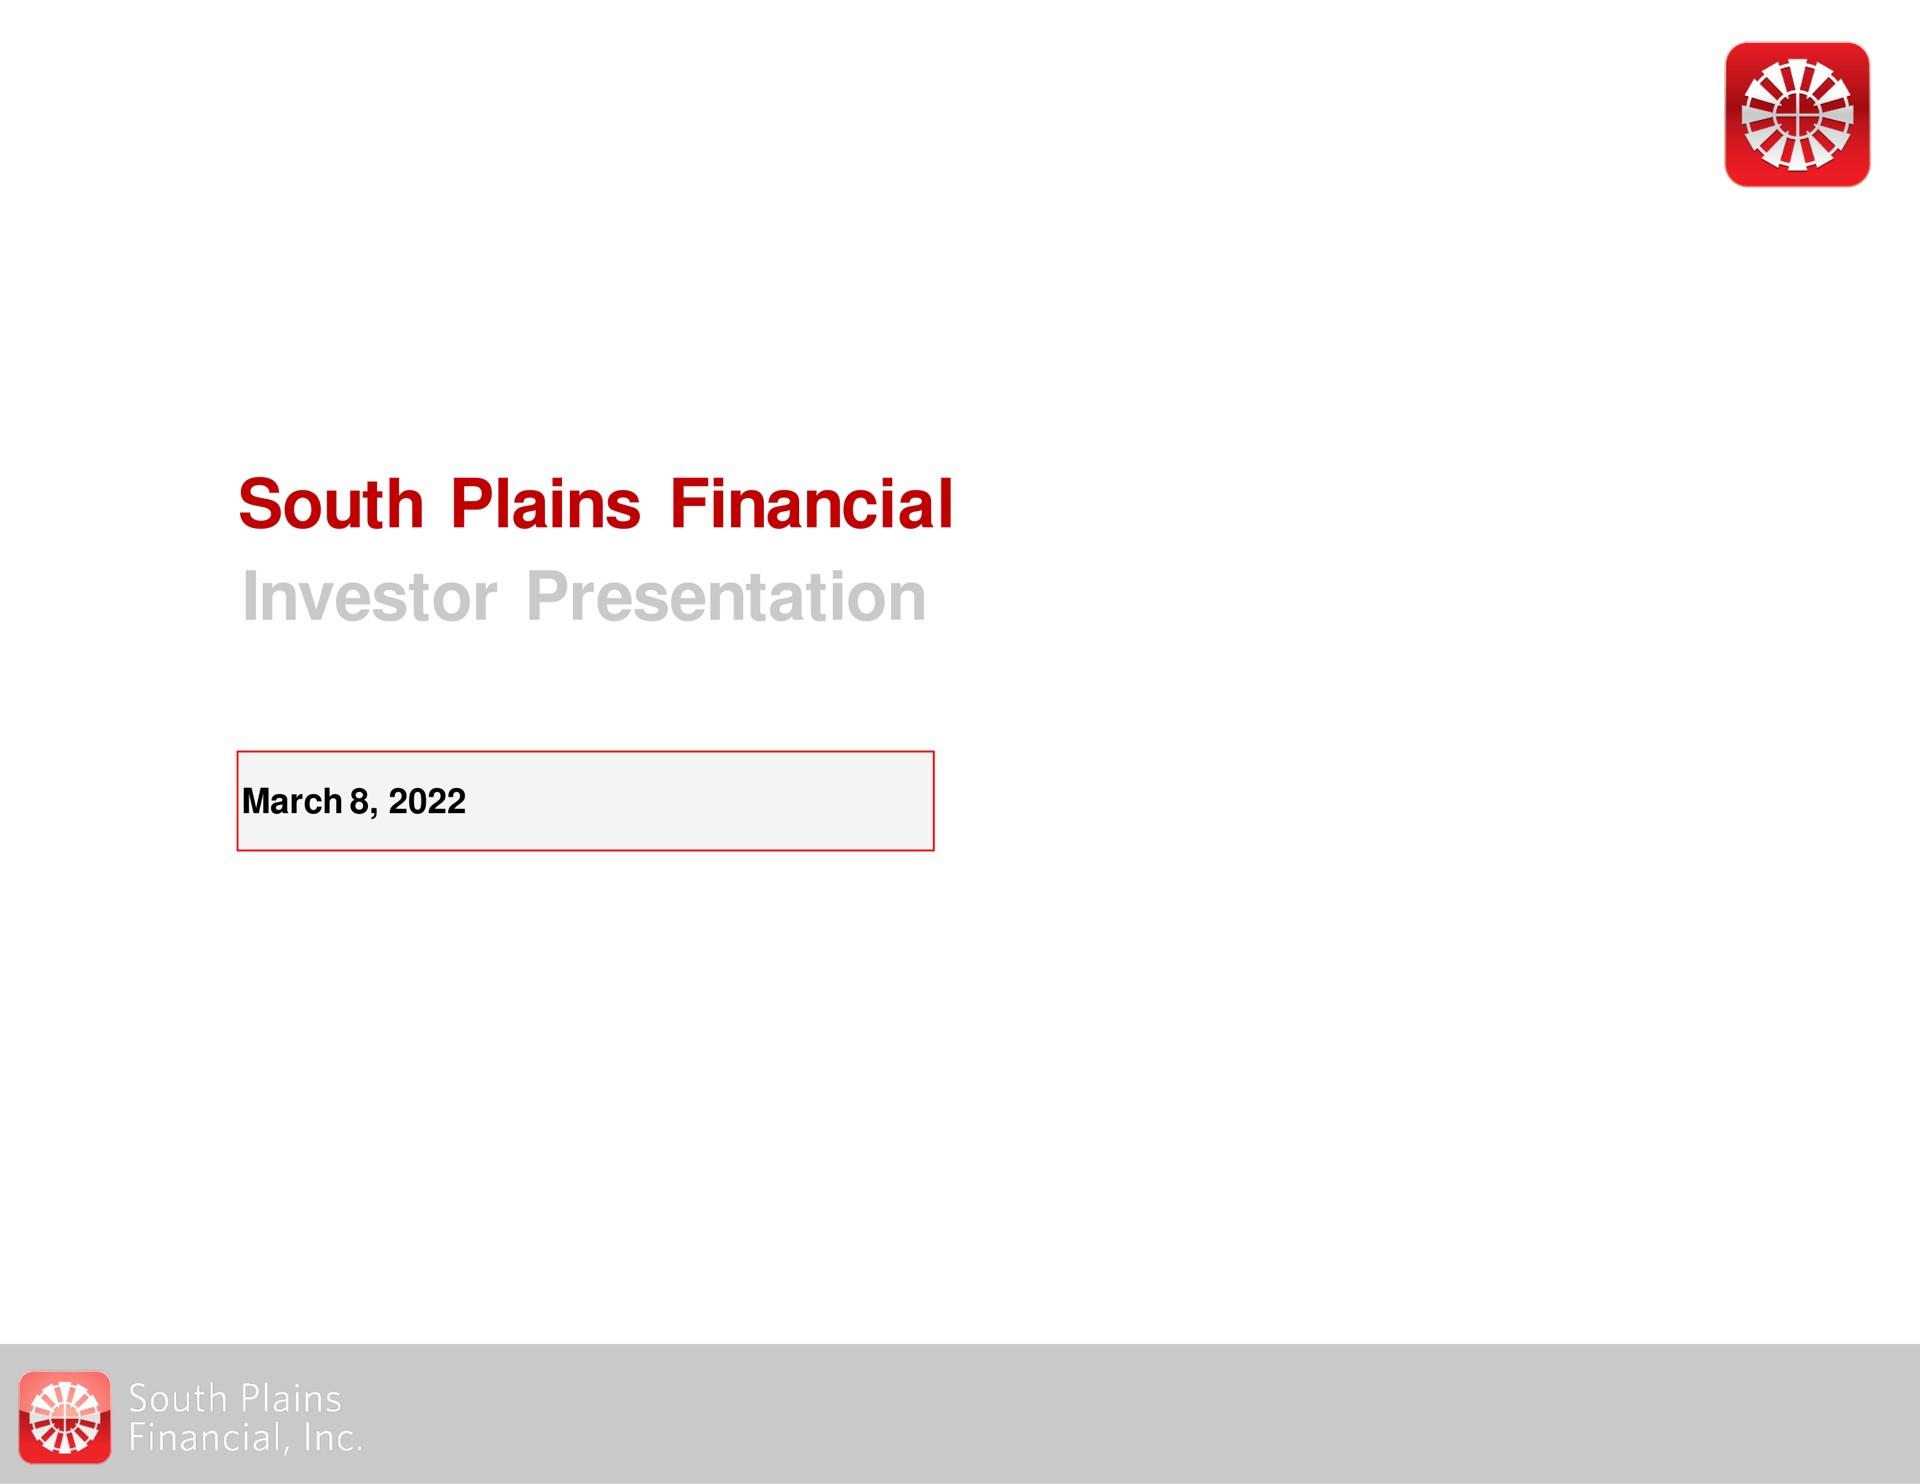 south plains financial investor presentation | South Plains Financial